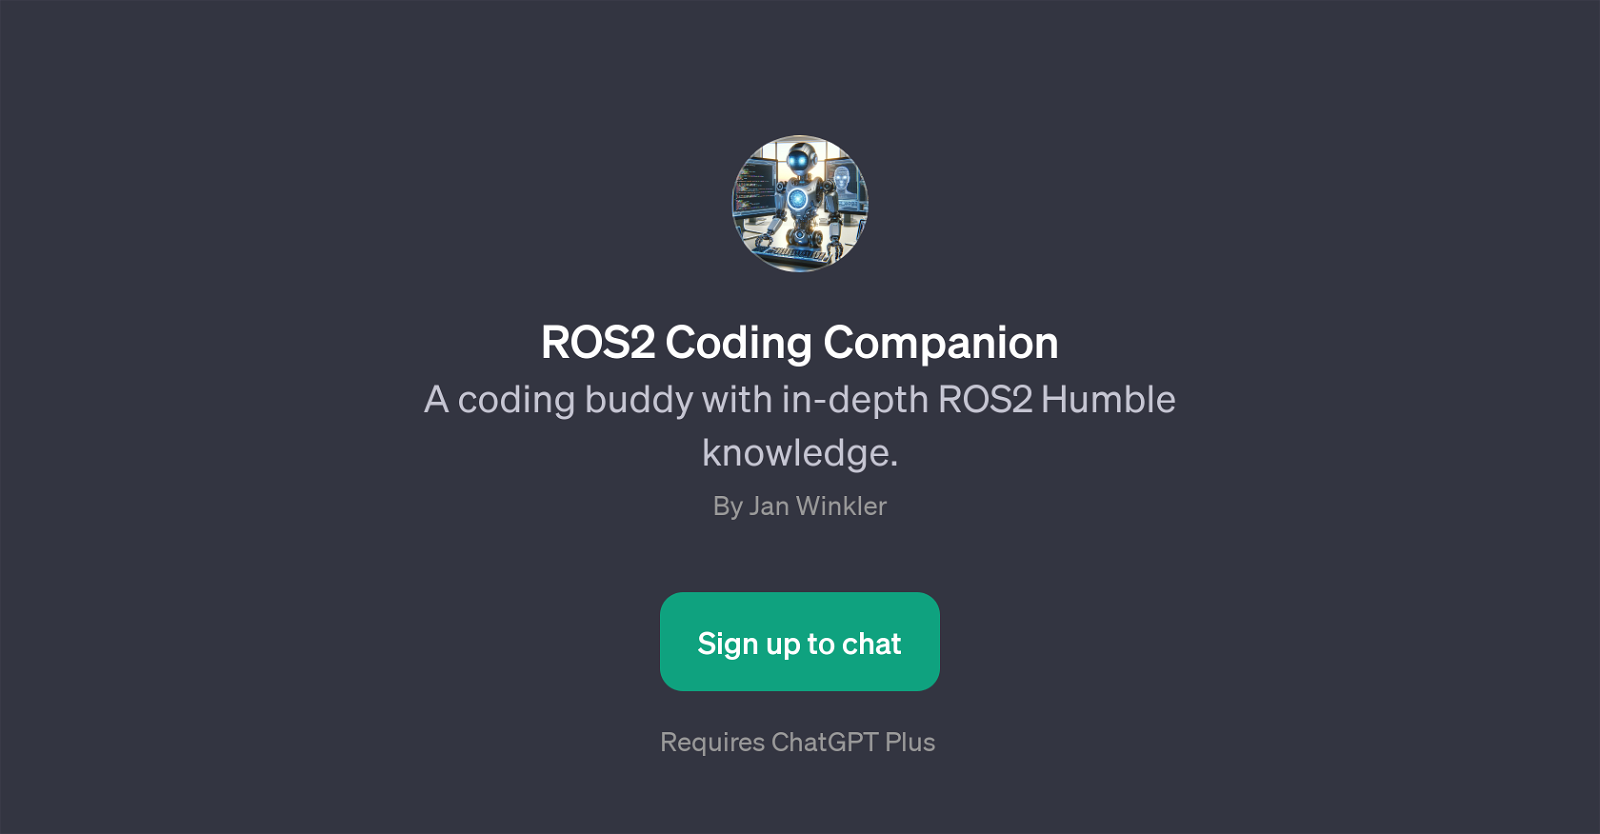 ROS2 Coding Companion website